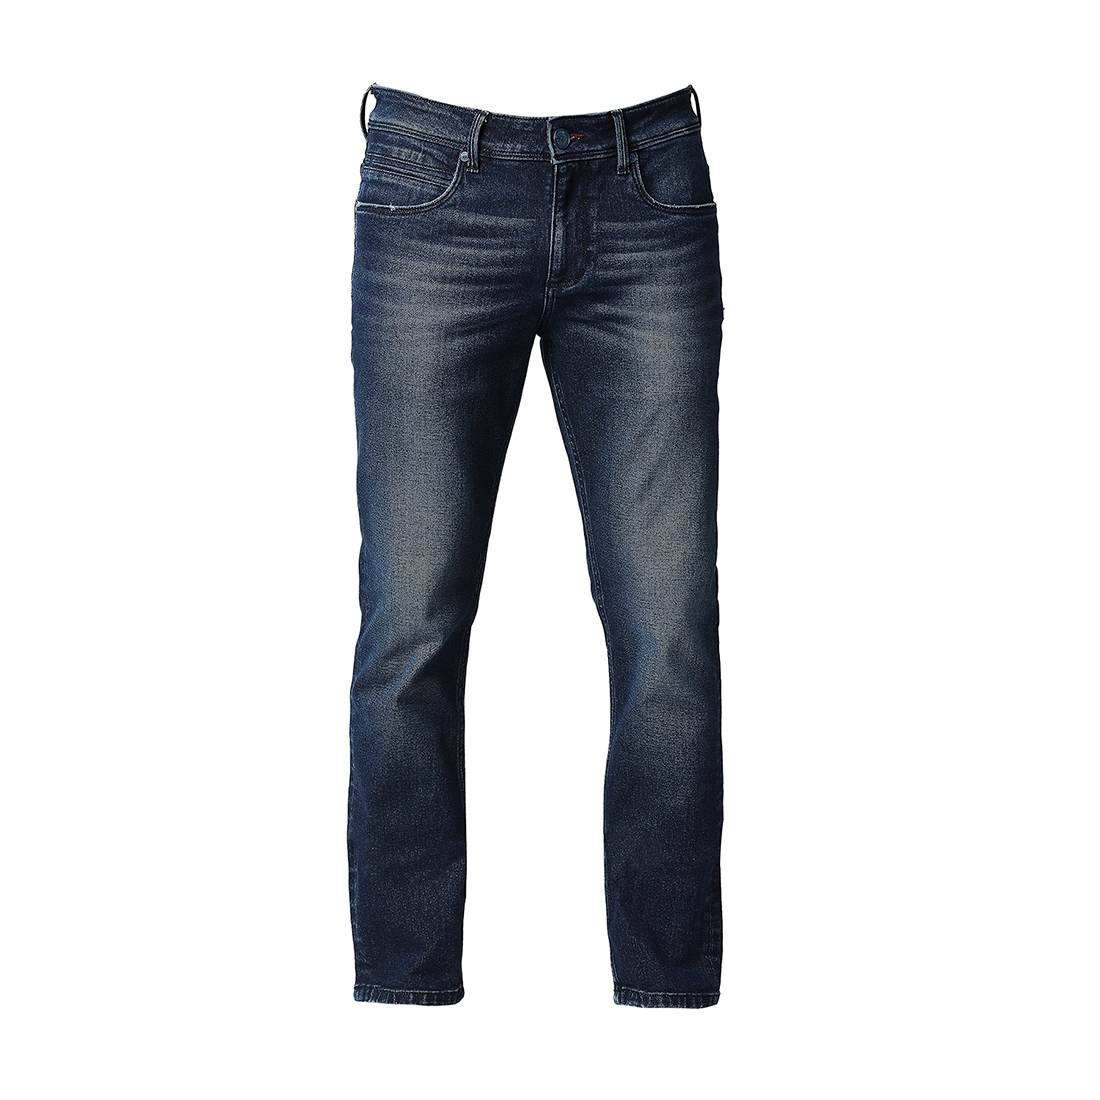 Basics | Men's Navy Cotton Blend Solid Jeans 5